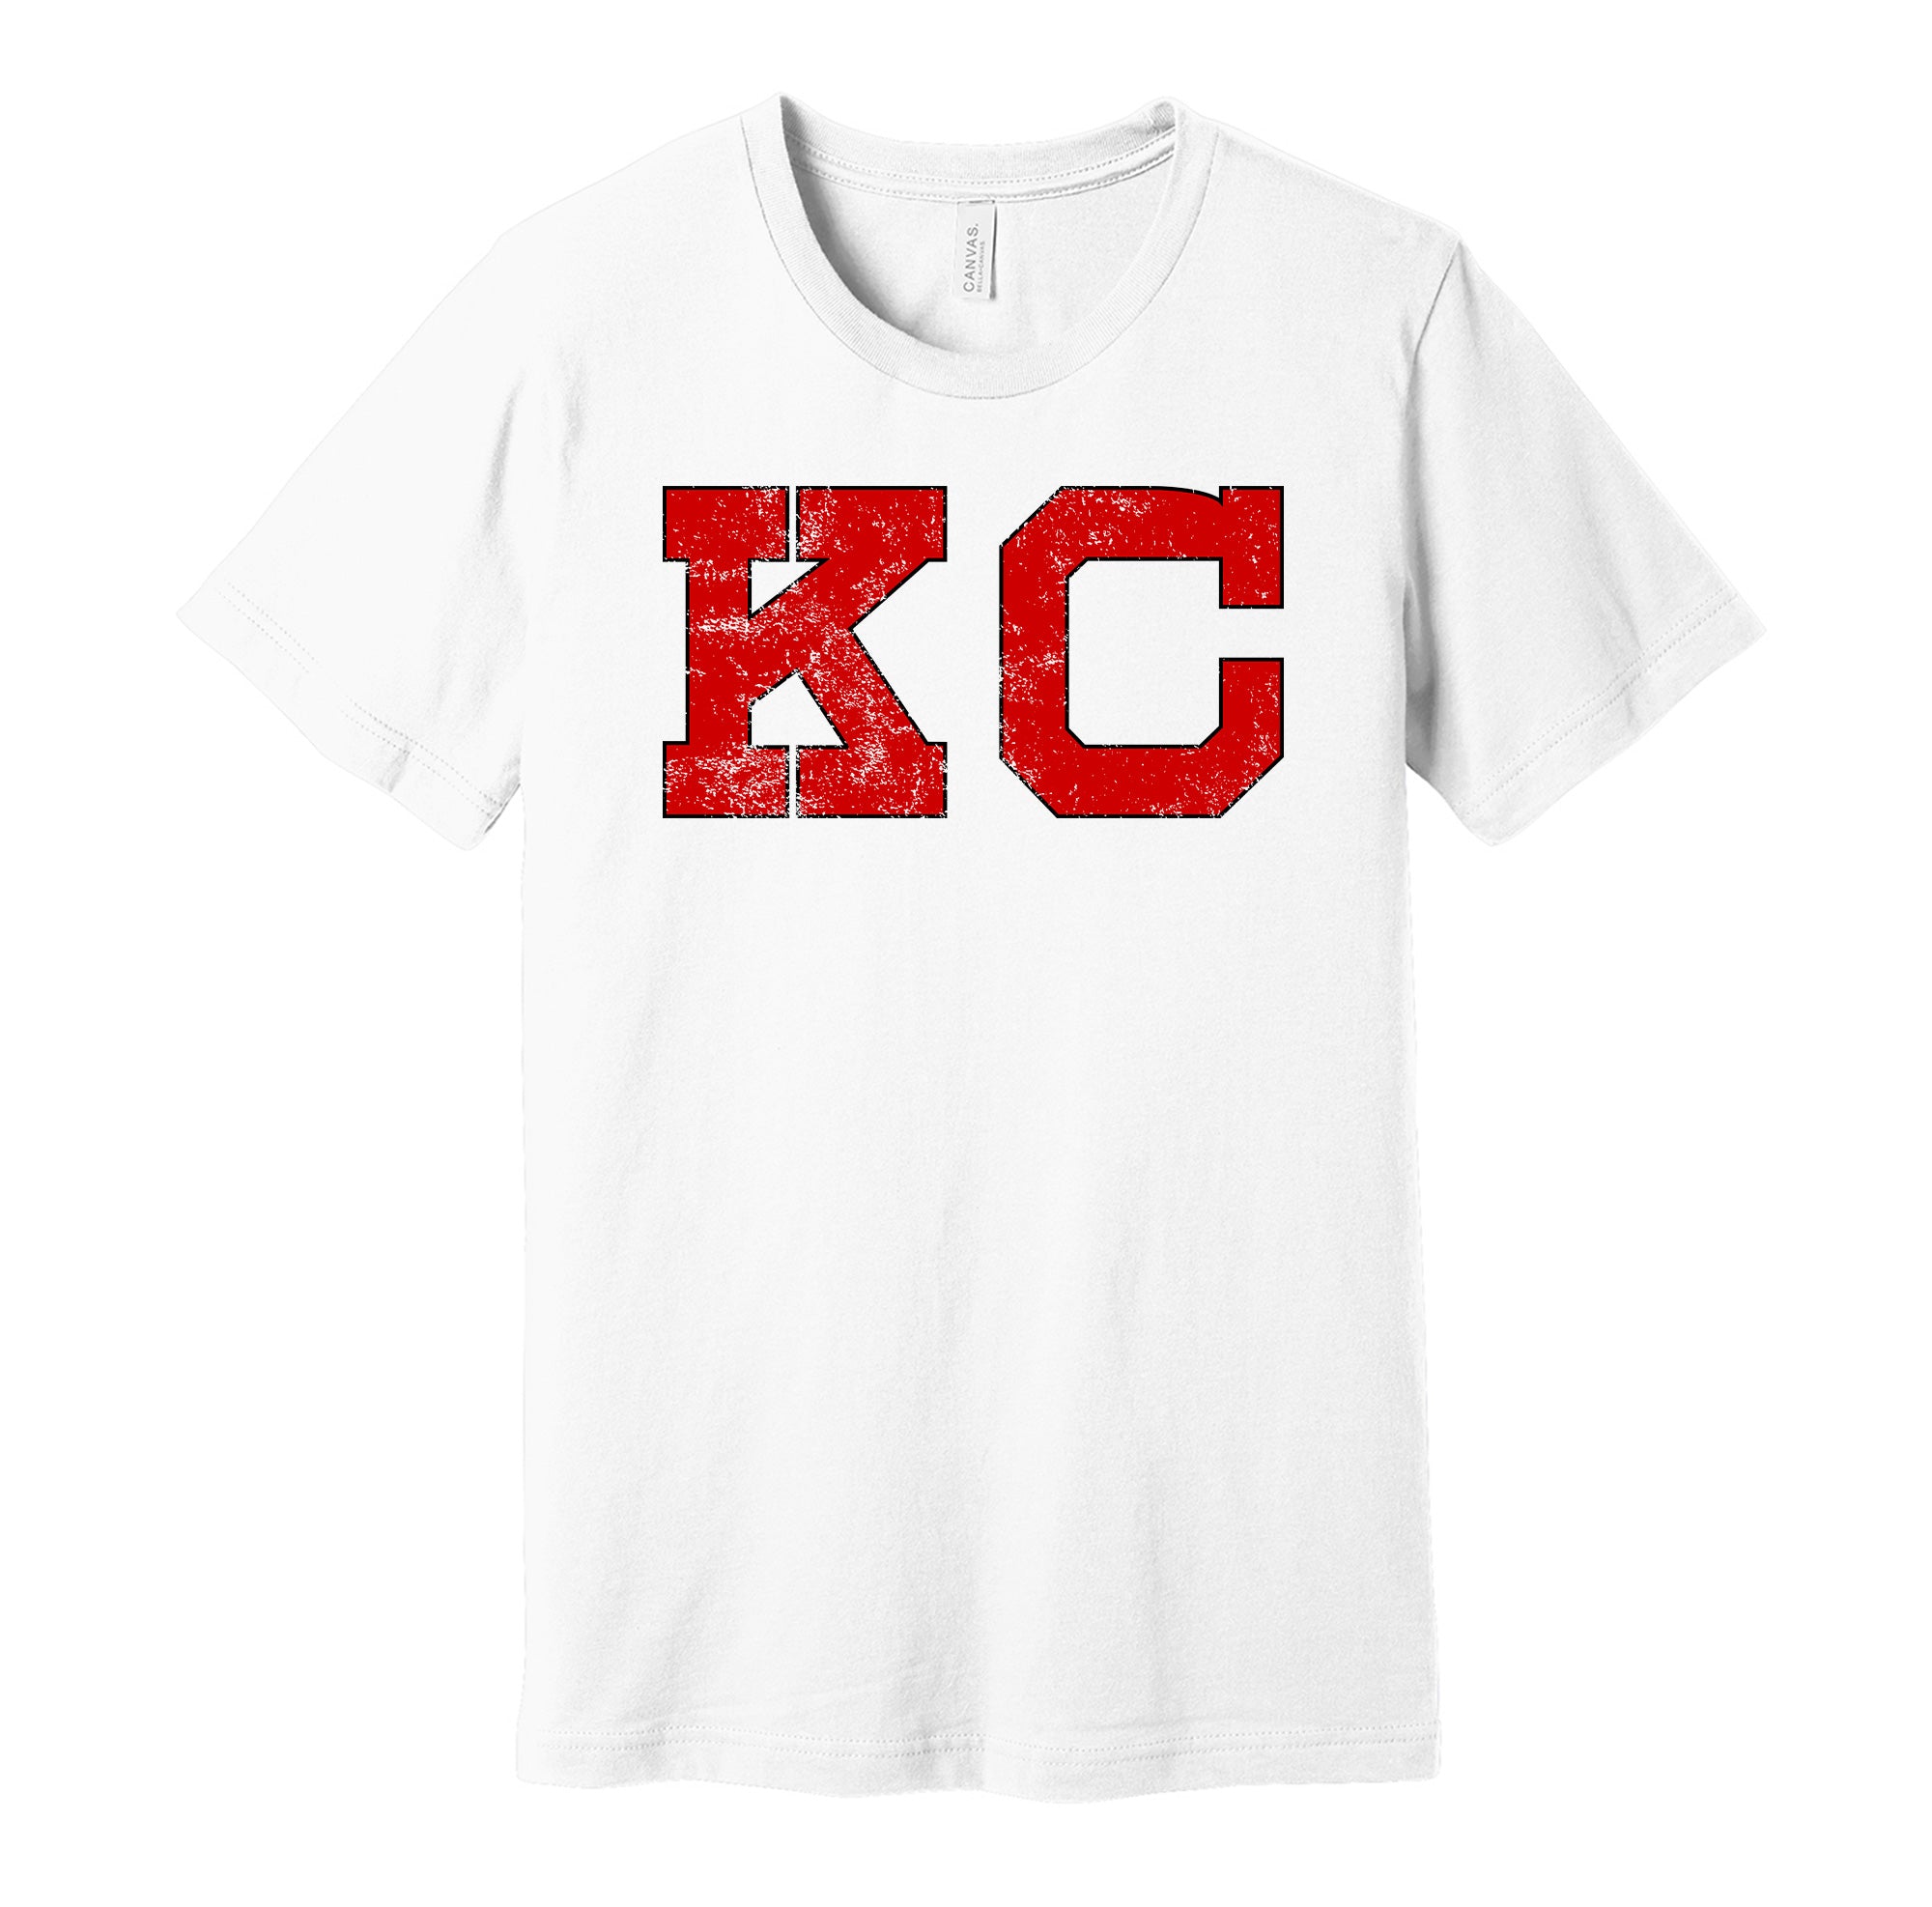 Hyper Than Hype Shirts Kansas City Monarchs Distressed Crown Logo Shirt - Defunct Negro Baseball Team - Celebrate Black Heritage and History - Hyper Than Hype S / Black